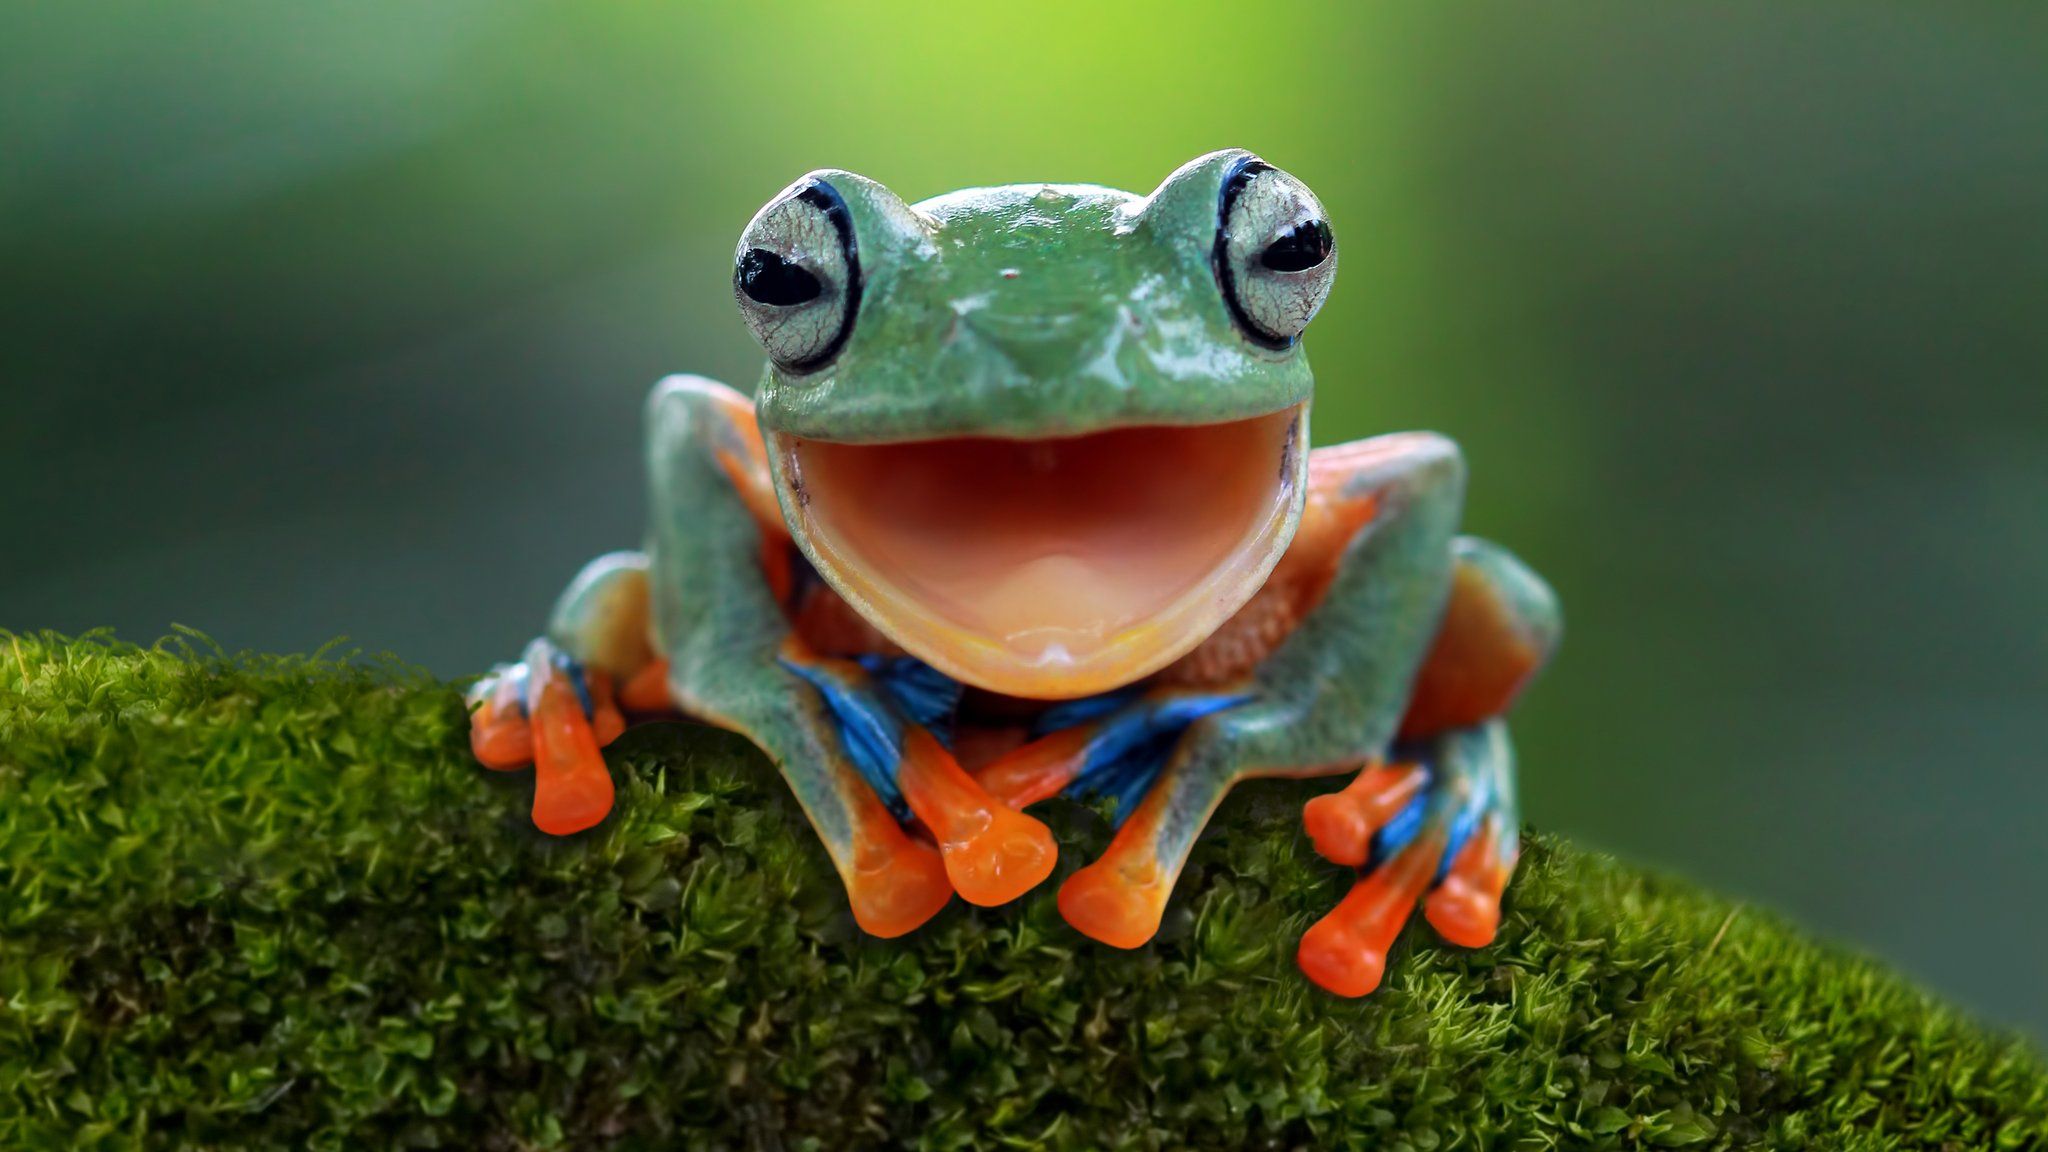 Frog smiling